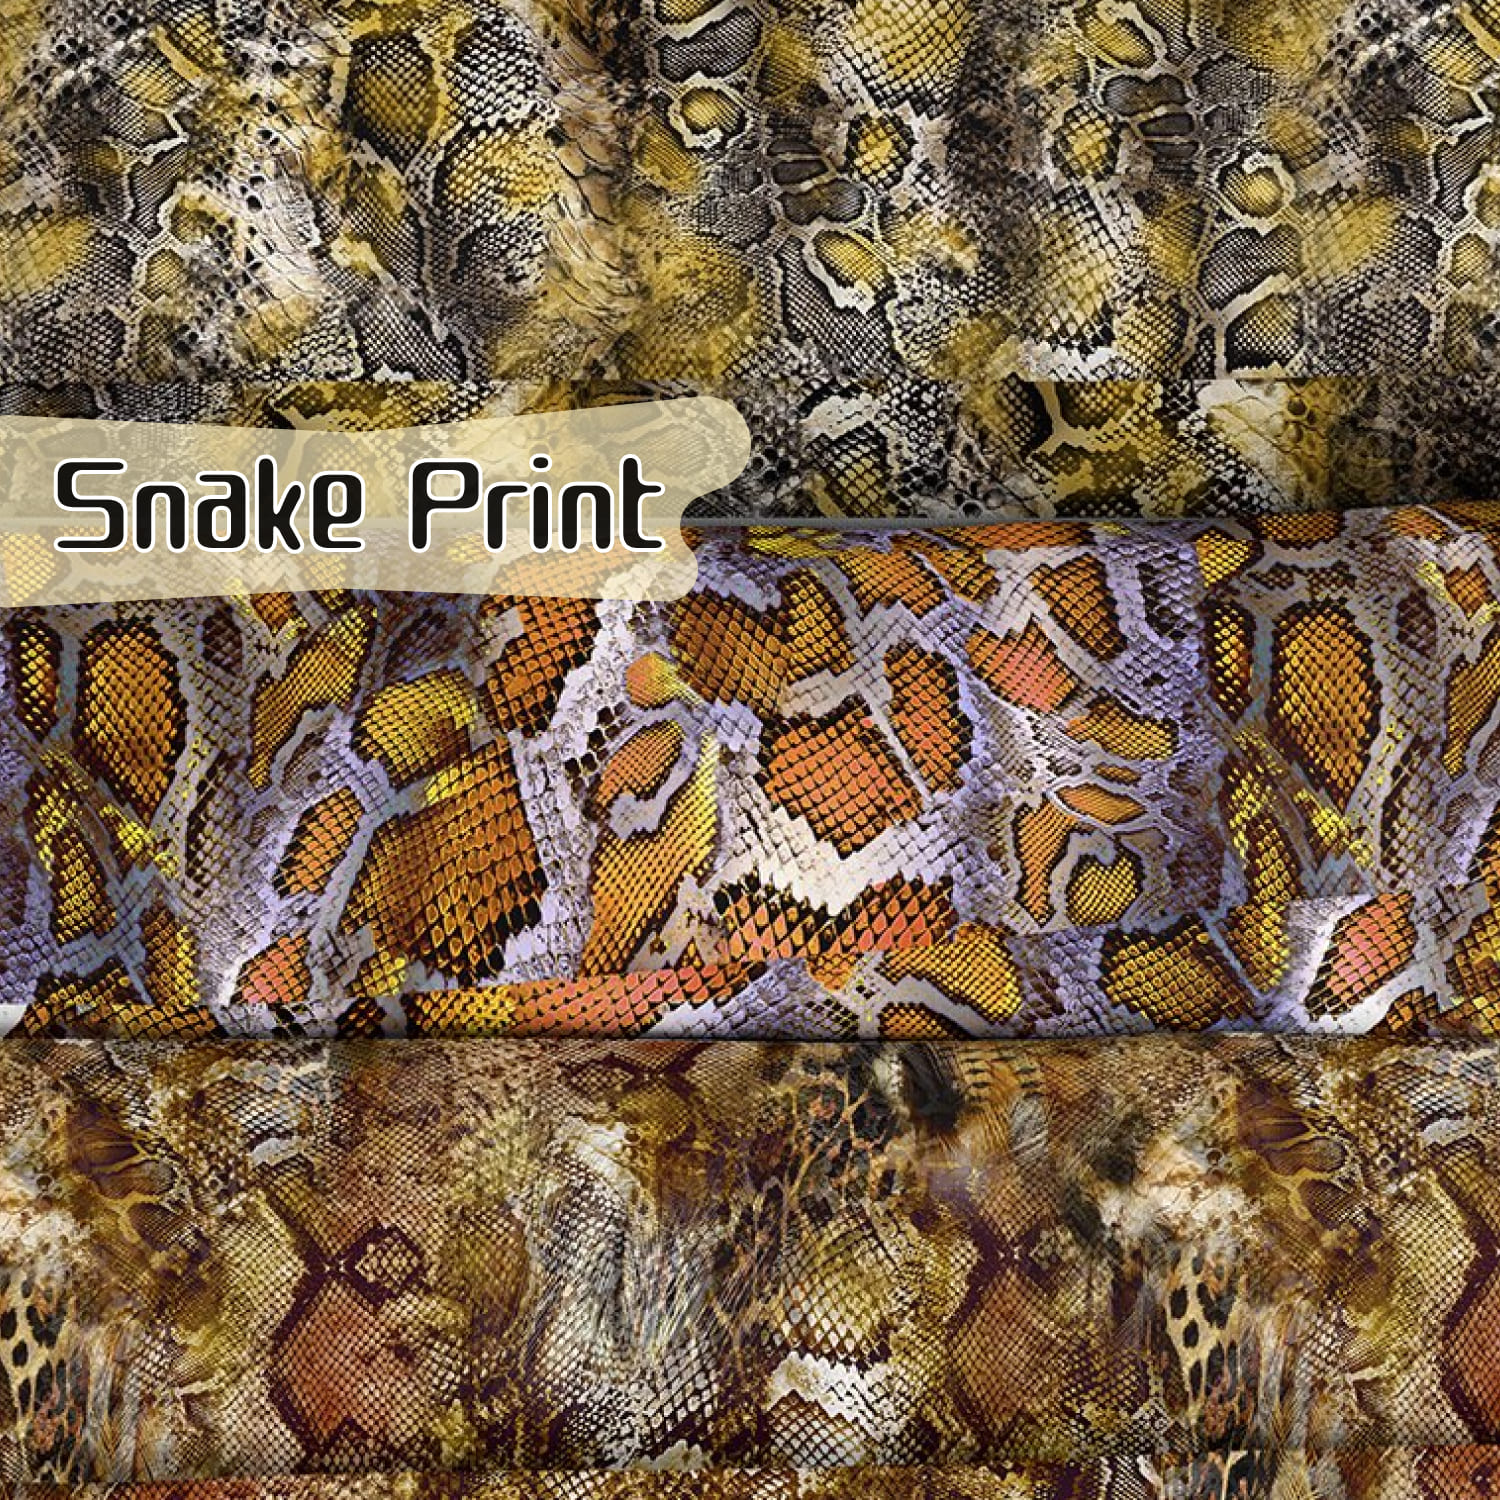 Snake Print.